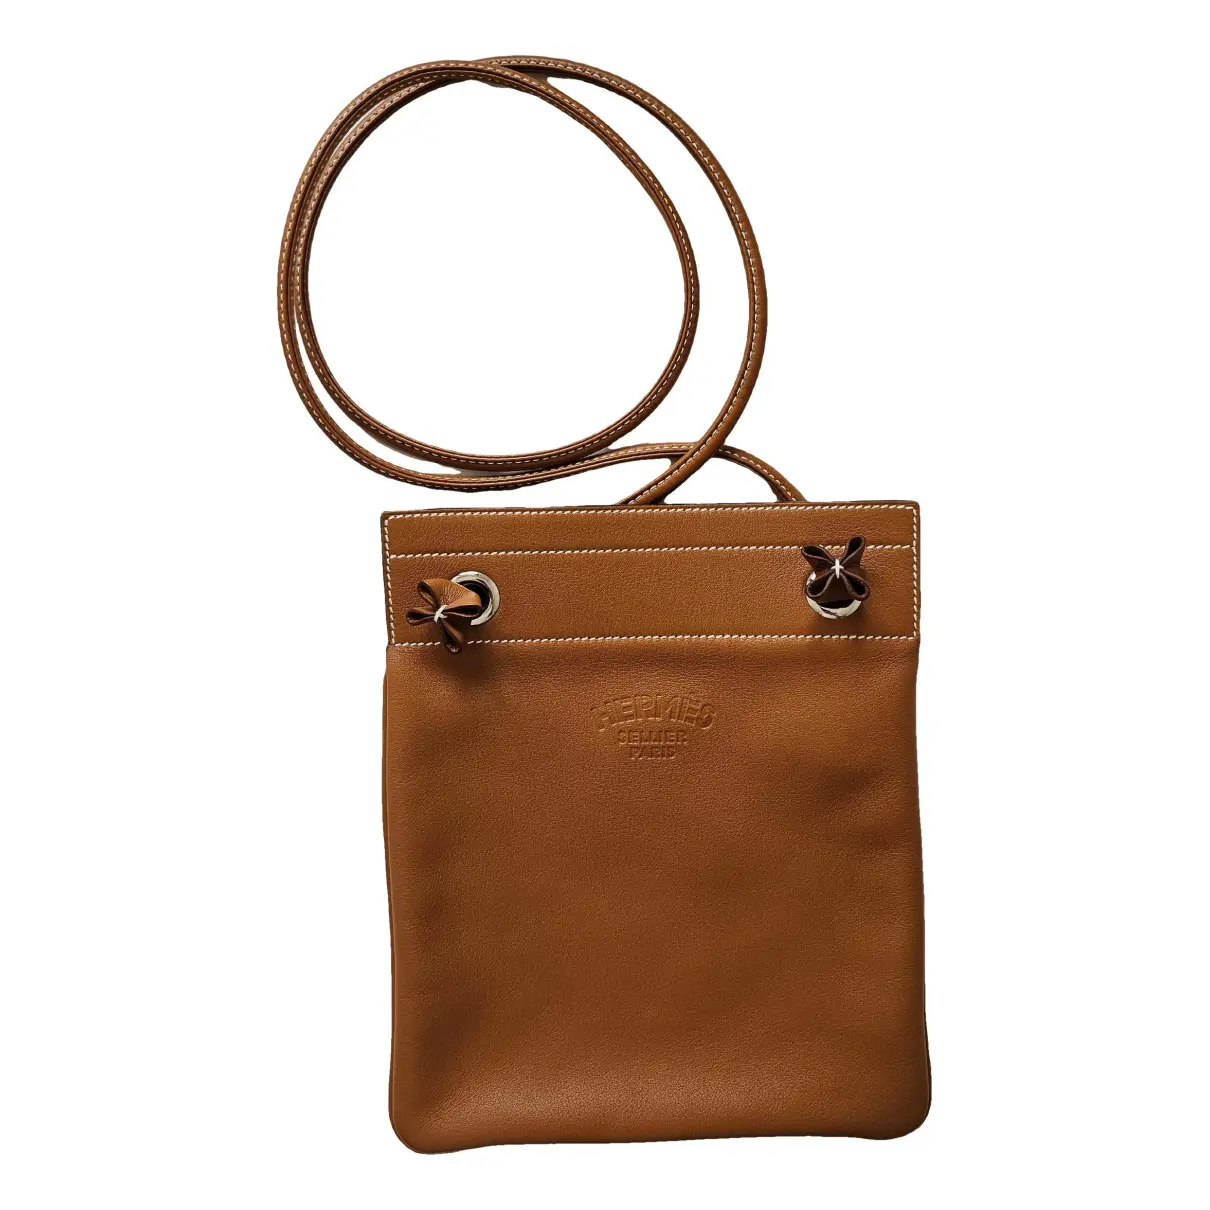 Aline leather crossbody bag